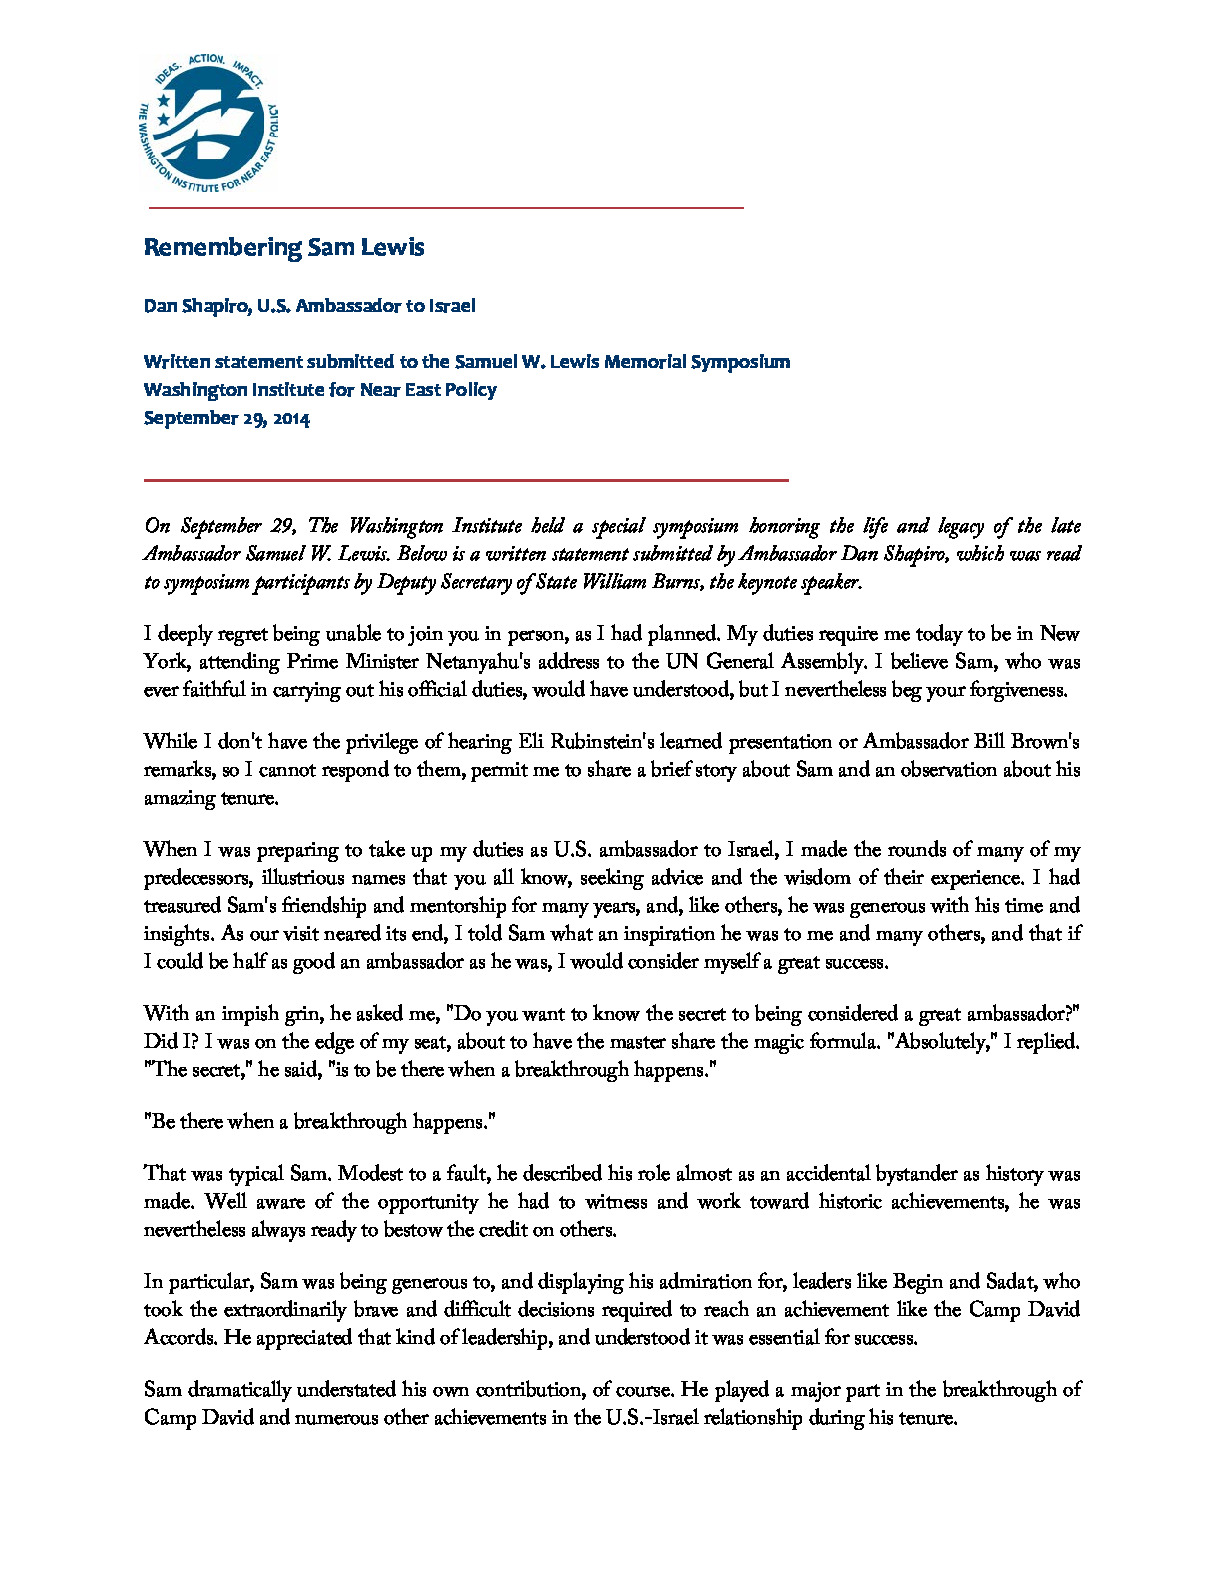 Shapiro-statement-LewisSymposium20140929.pdf